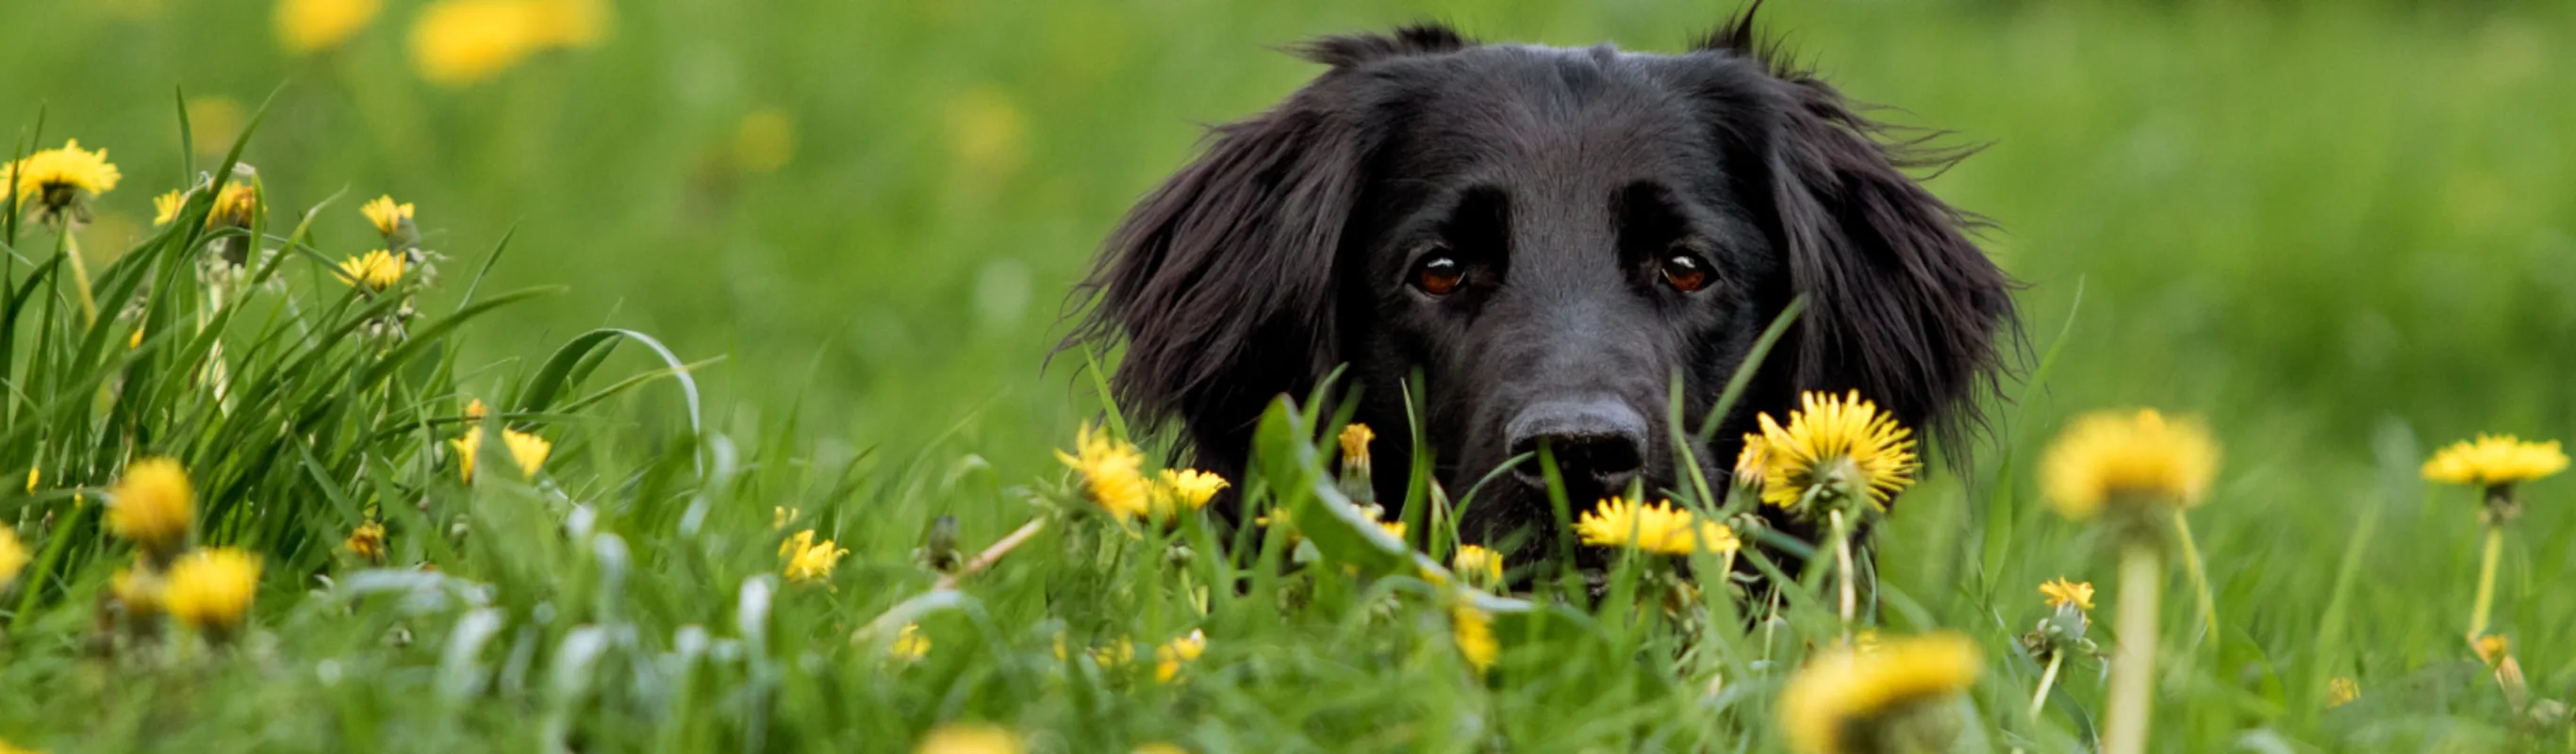 Black dog lying in yellow flowers